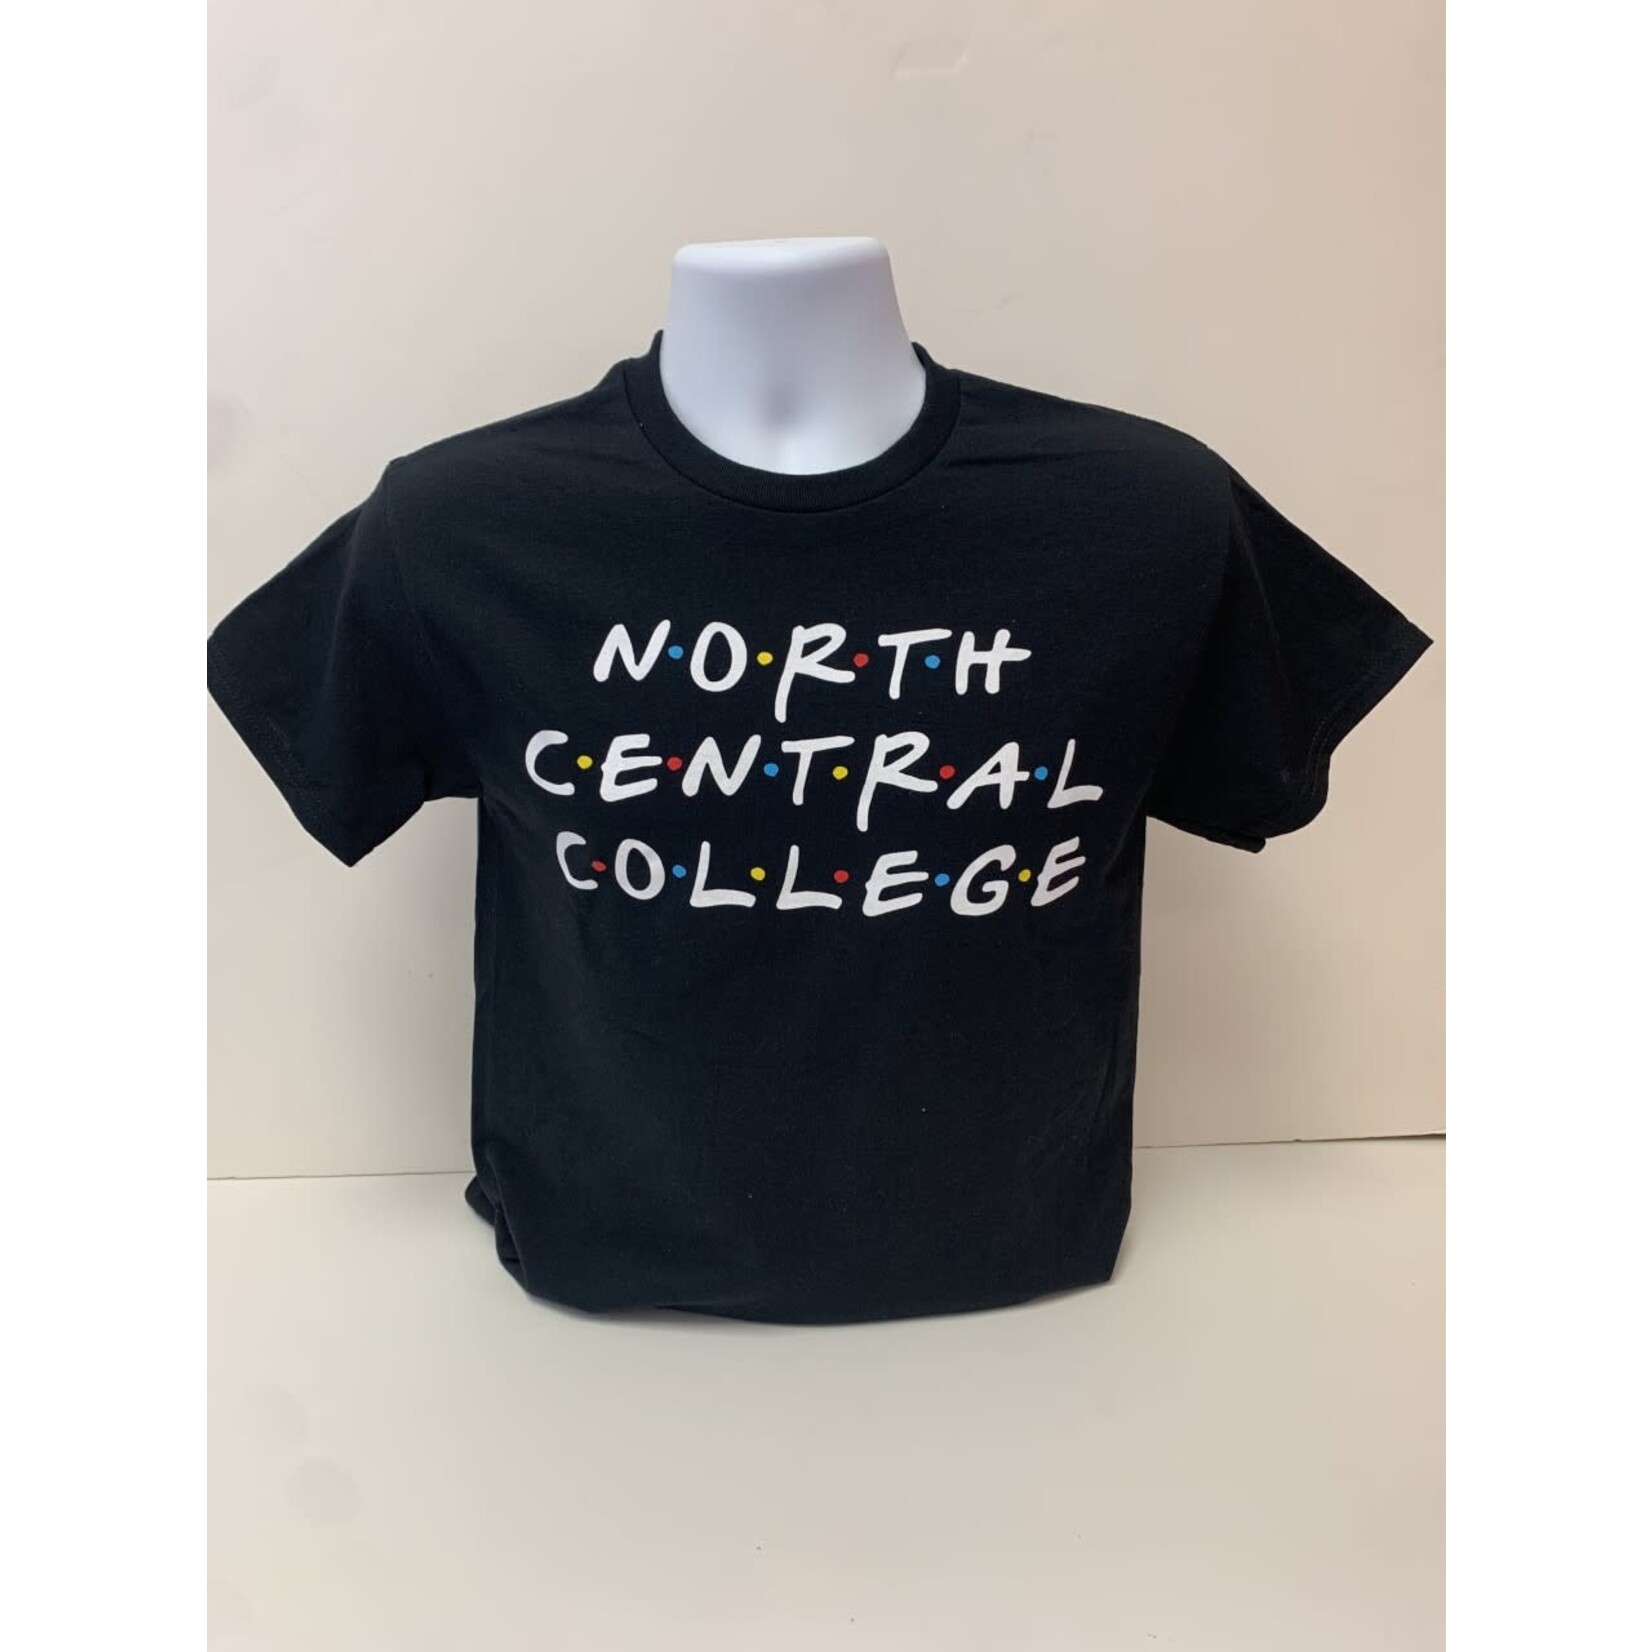 New Agenda North Central College Friends Shirt